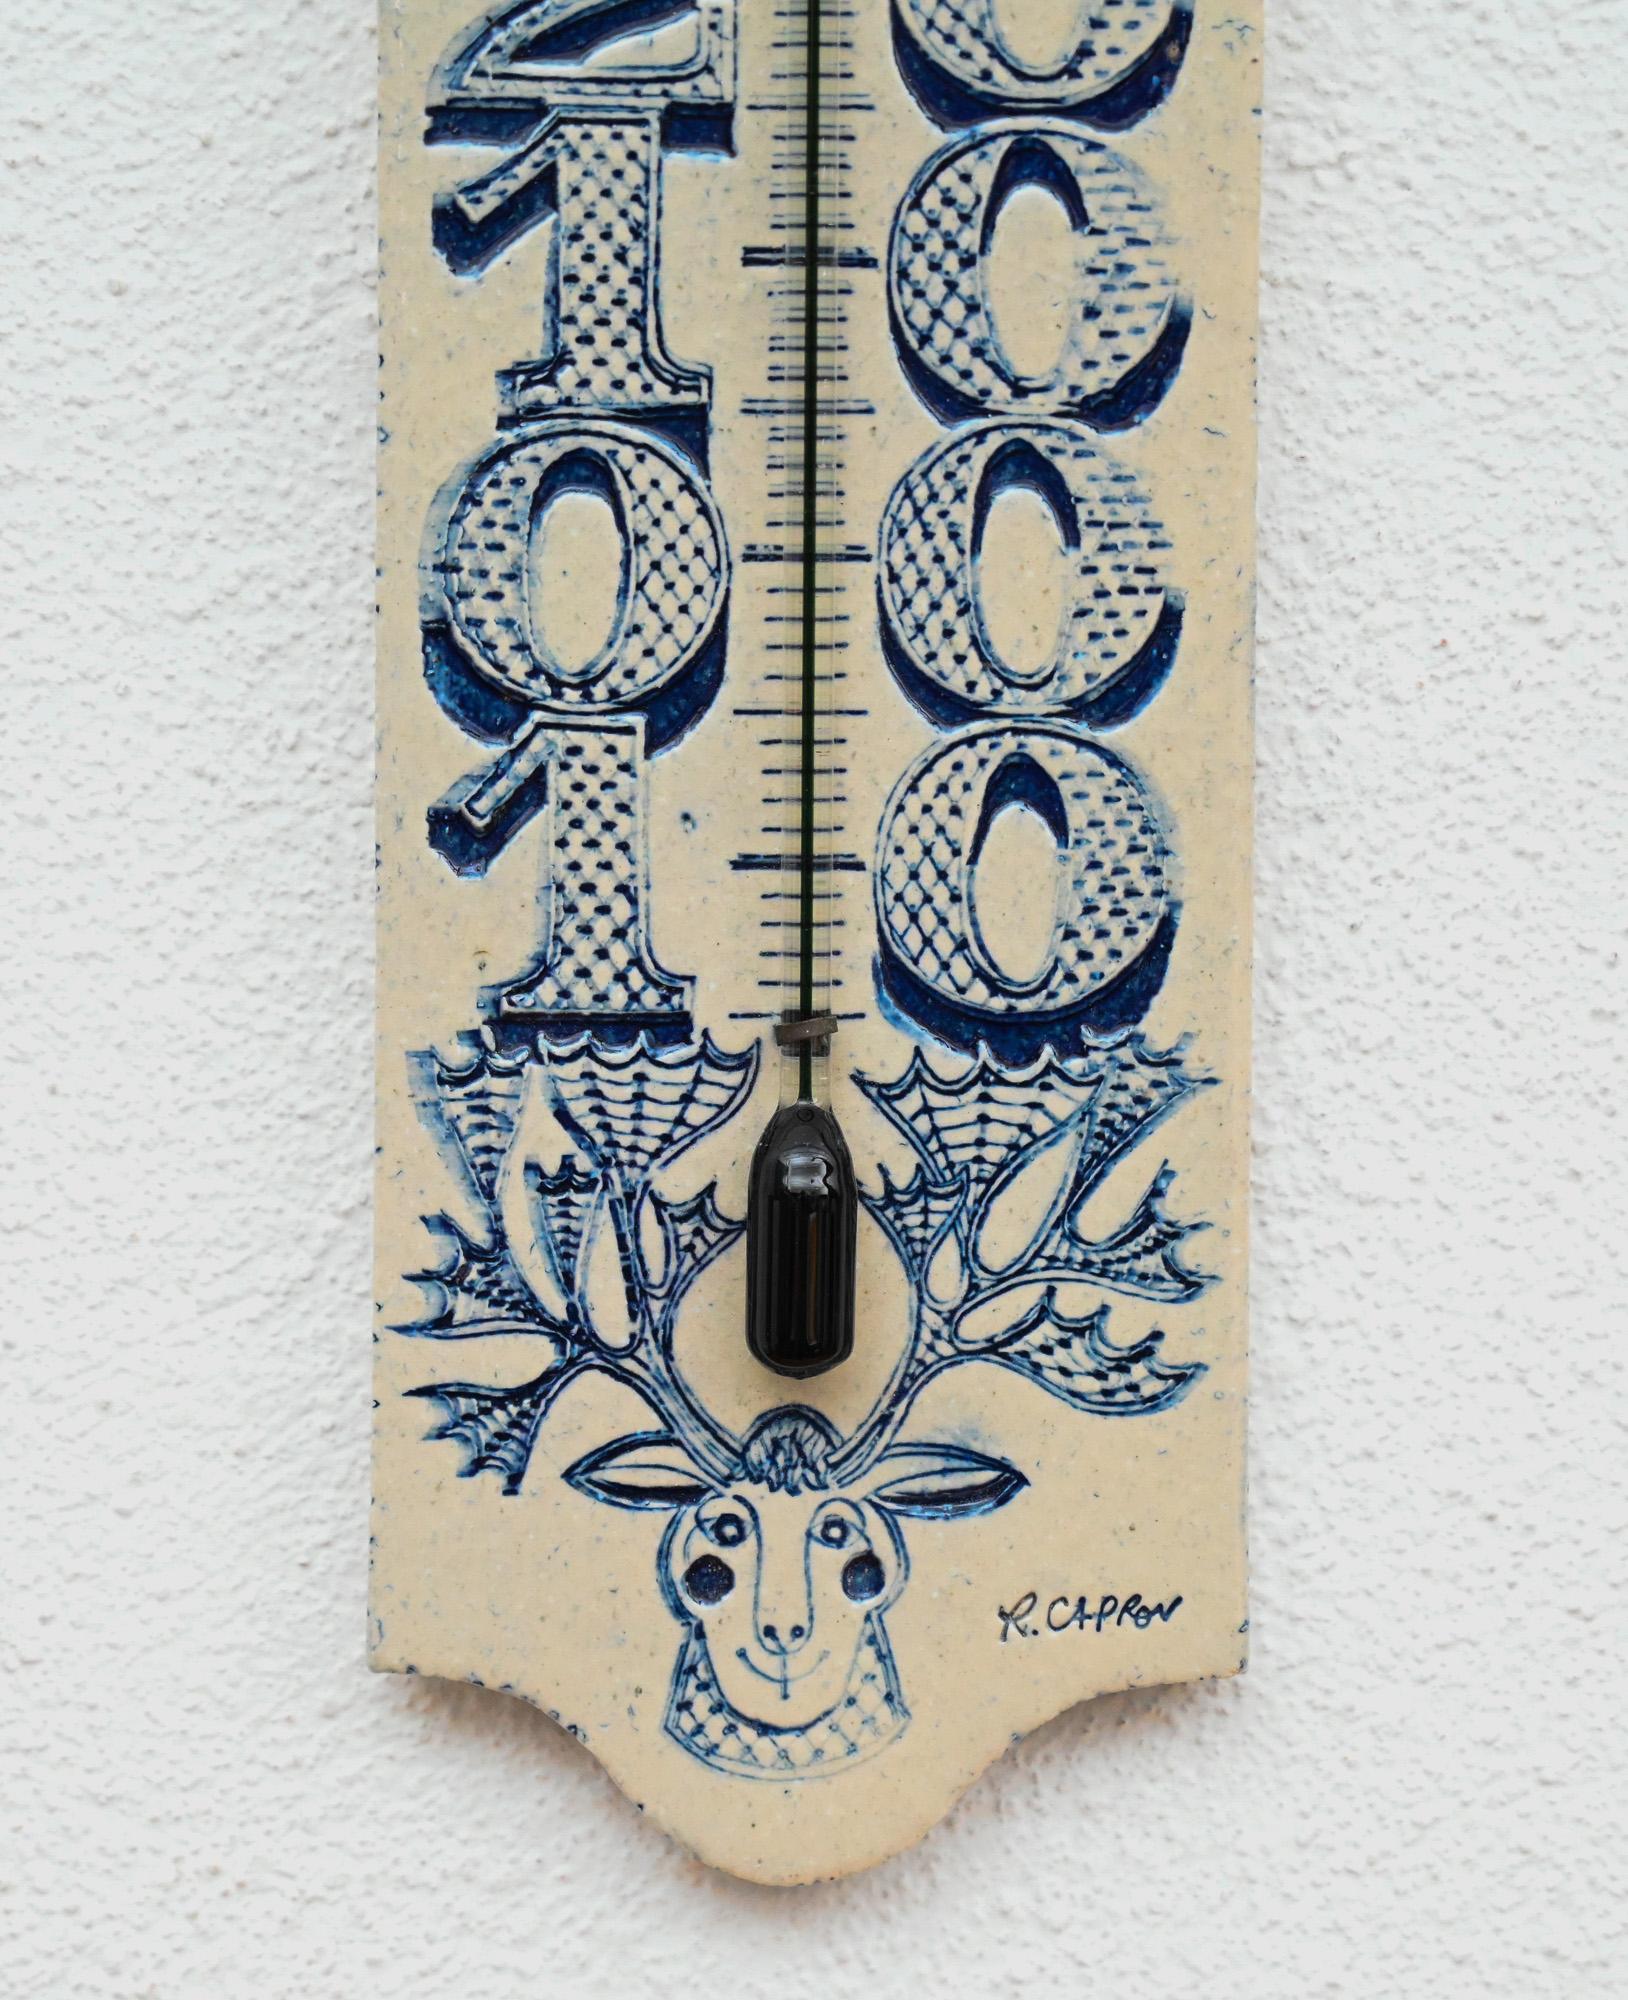 mid century Roger Capron ceramic thermometer 1